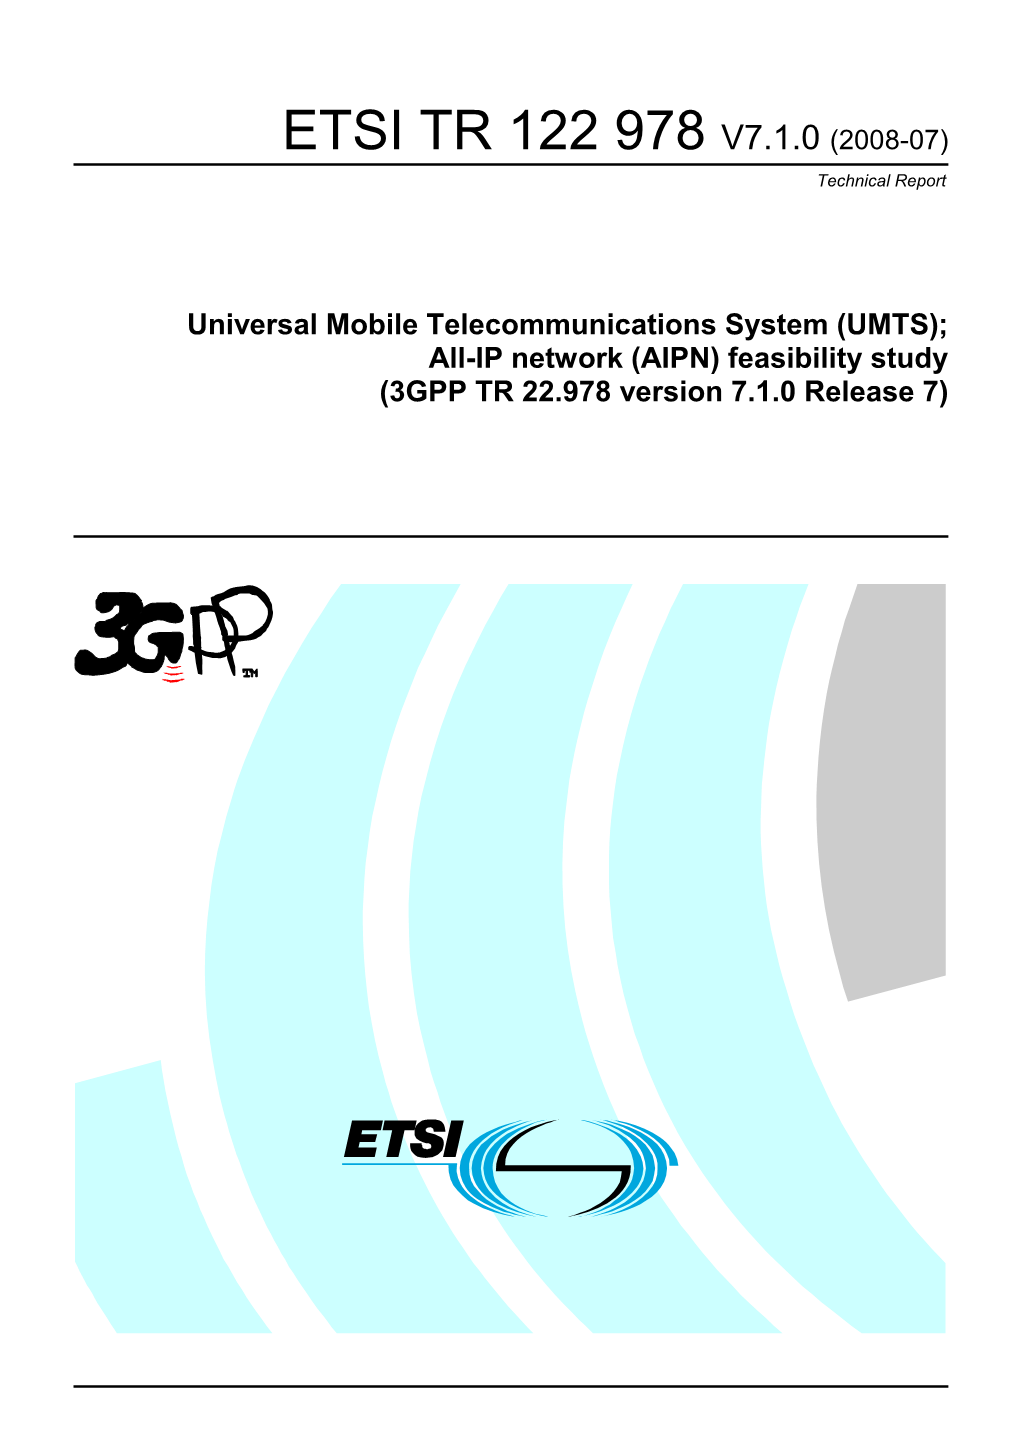 TR 122 978 V7.1.0 (2008-07) Technical Report